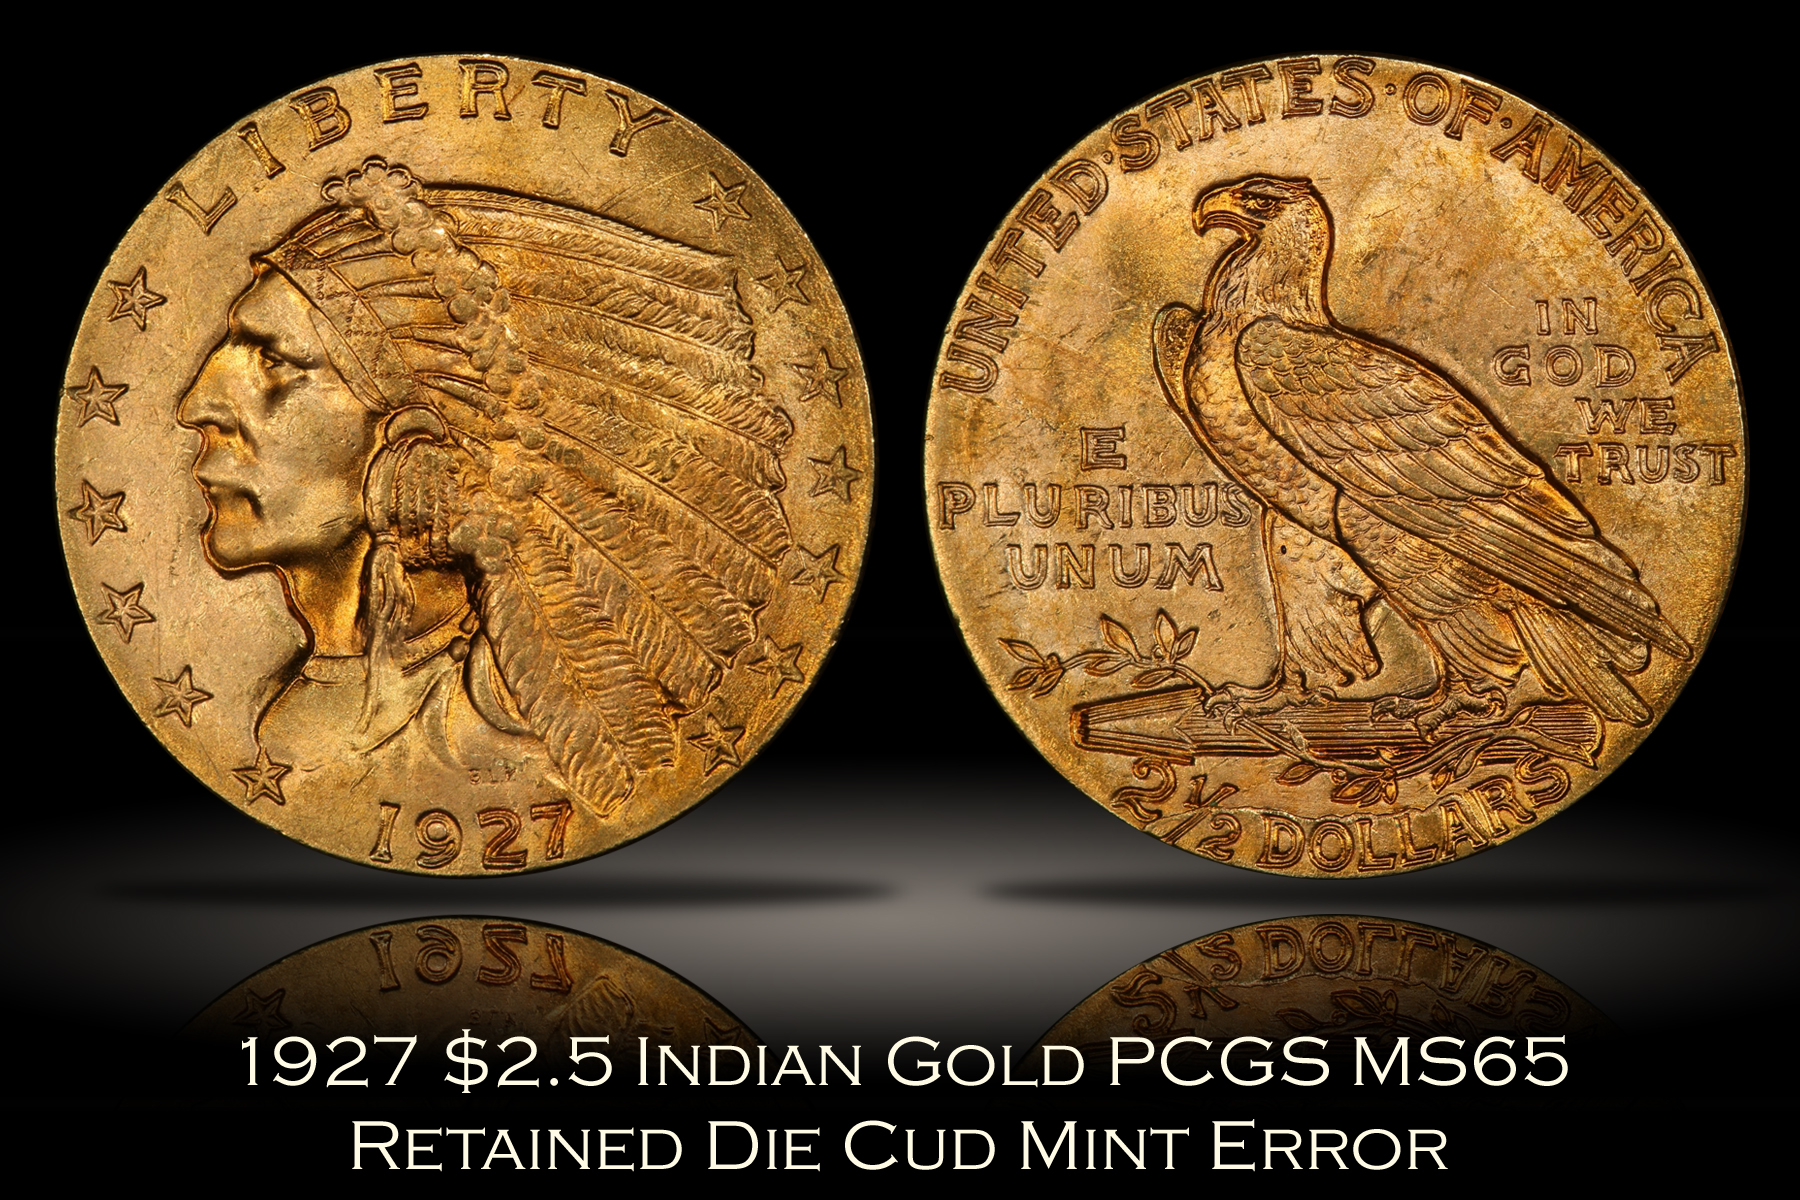 1927 $2.5 Indian Gold PCGS MS65 Retained Die Cud Error